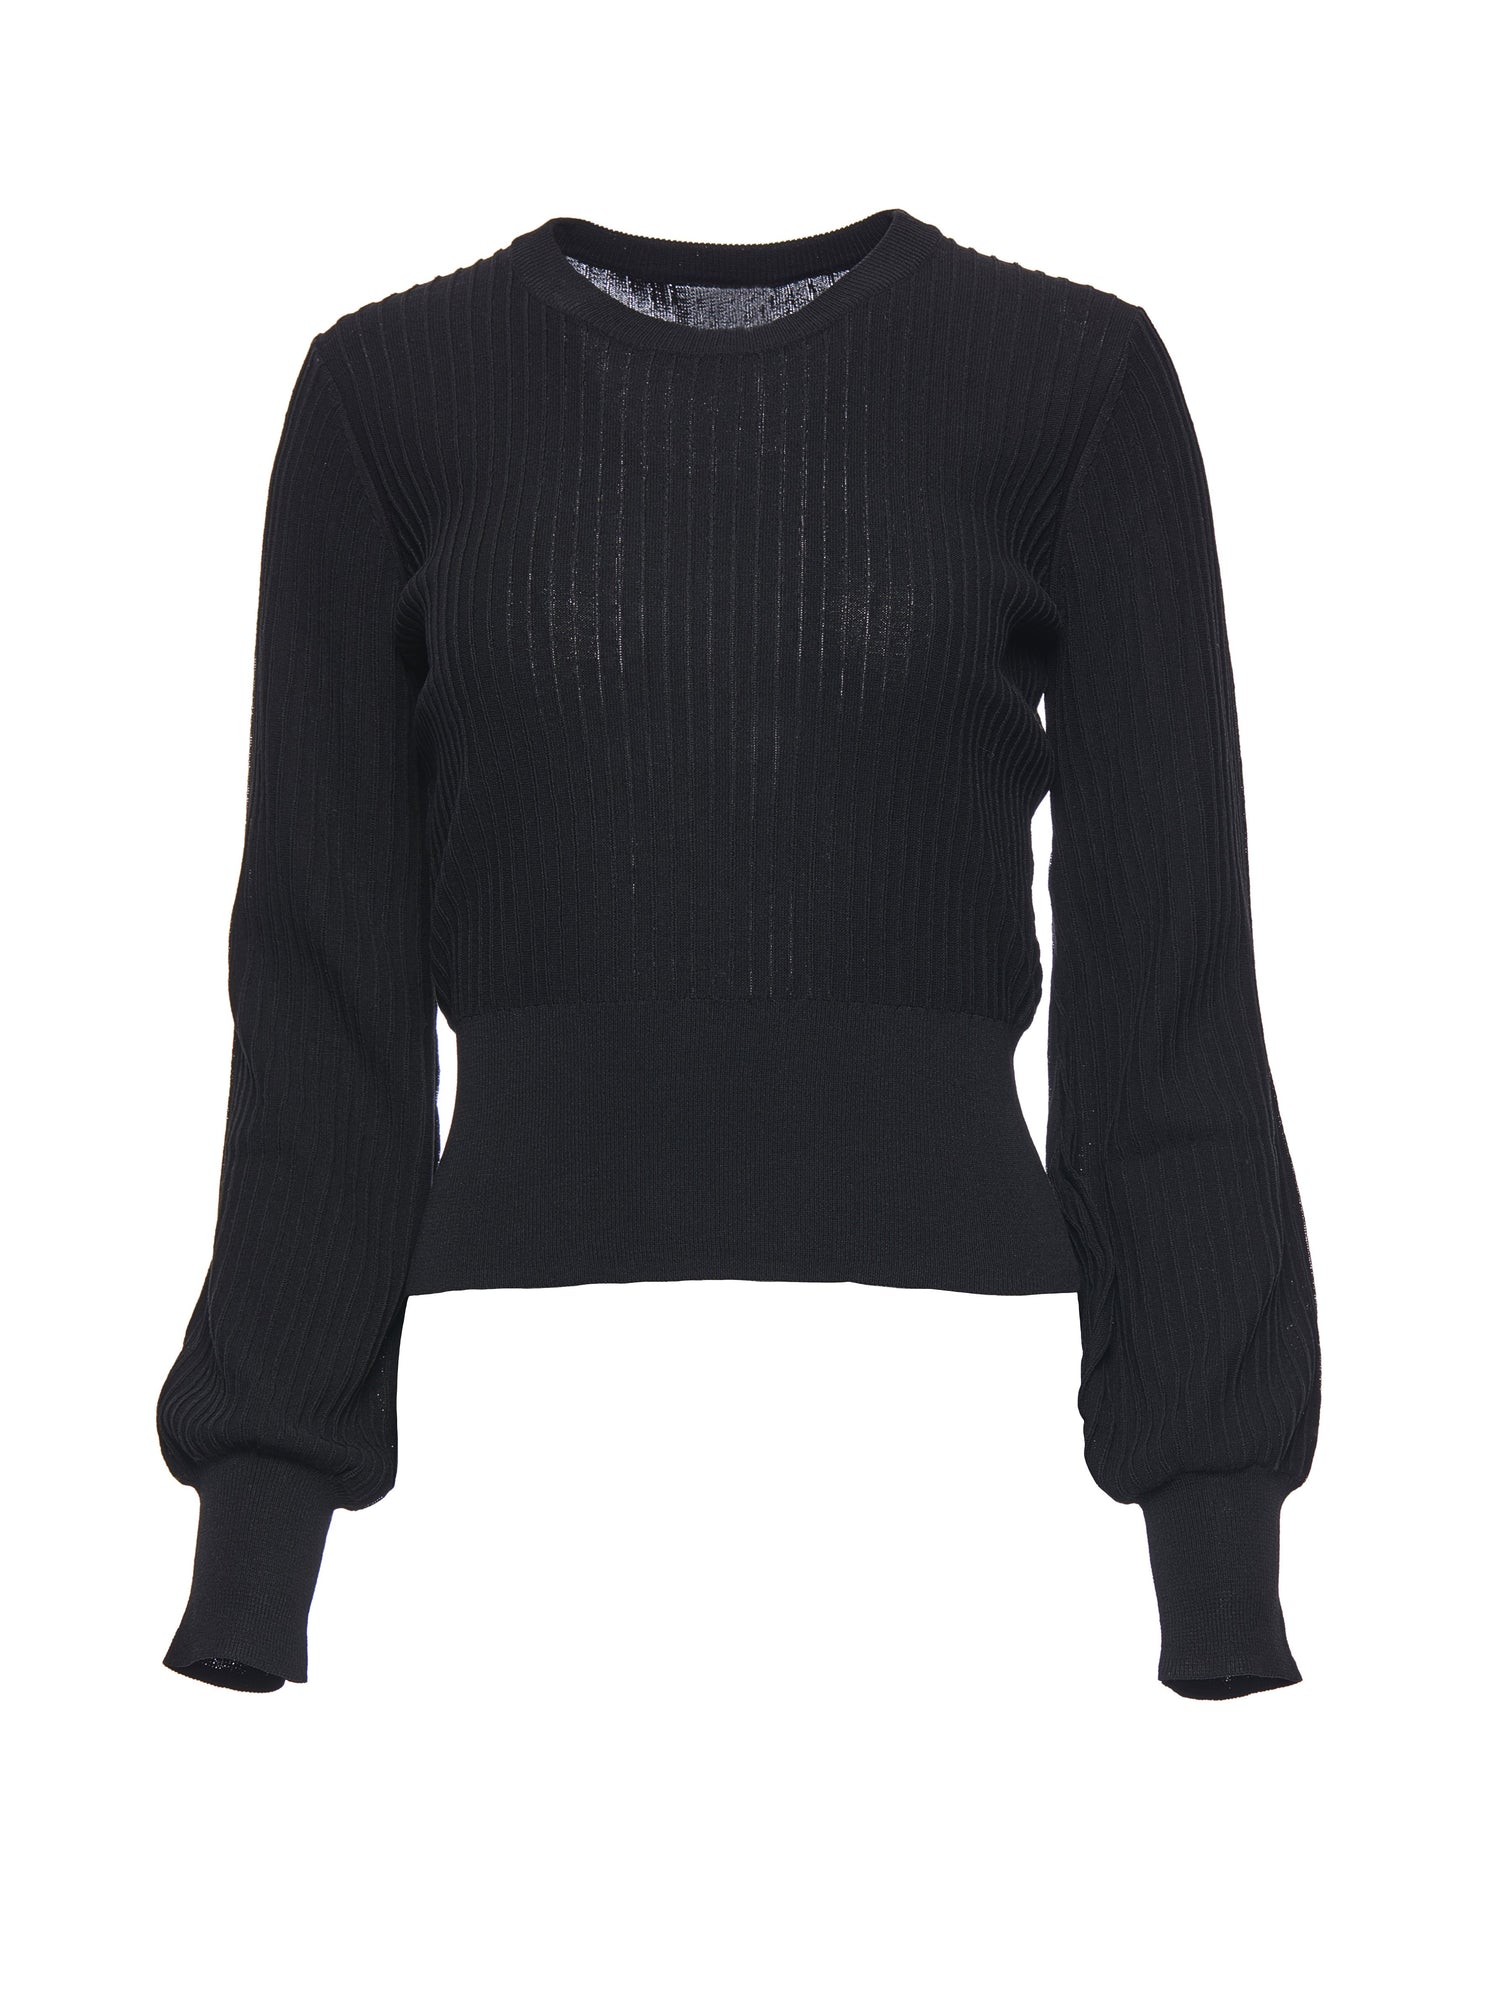 Black Knit Sweater | Hilary MacMillan